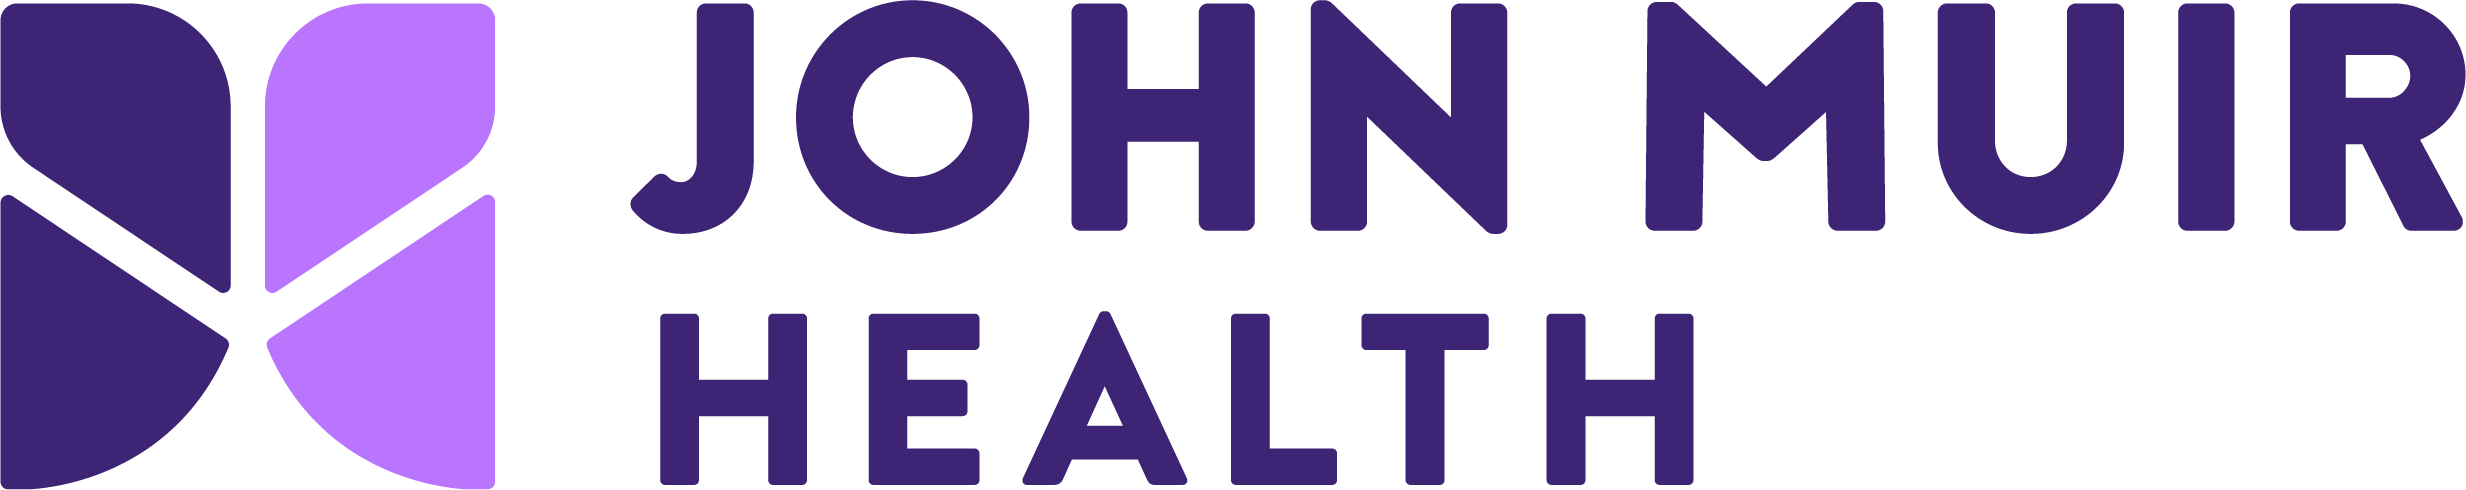 John Muir Health Employee Intranet Login Pages Info